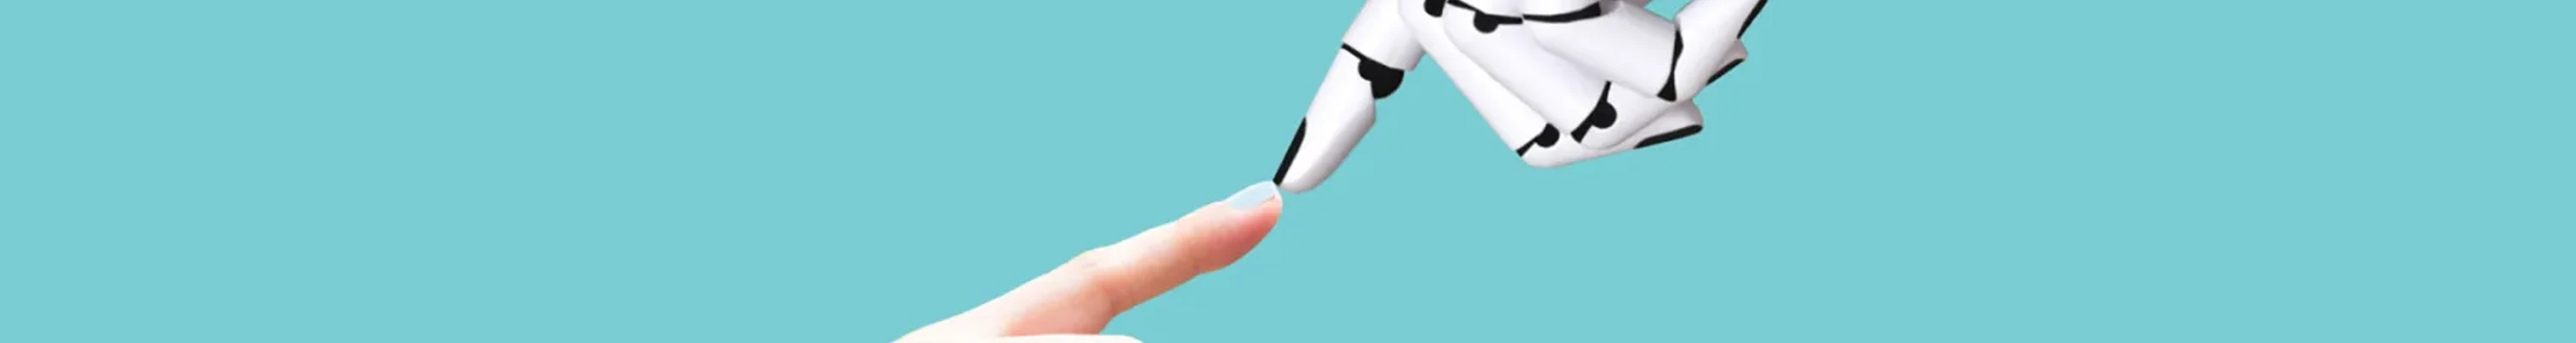 robot and human hands meet resized